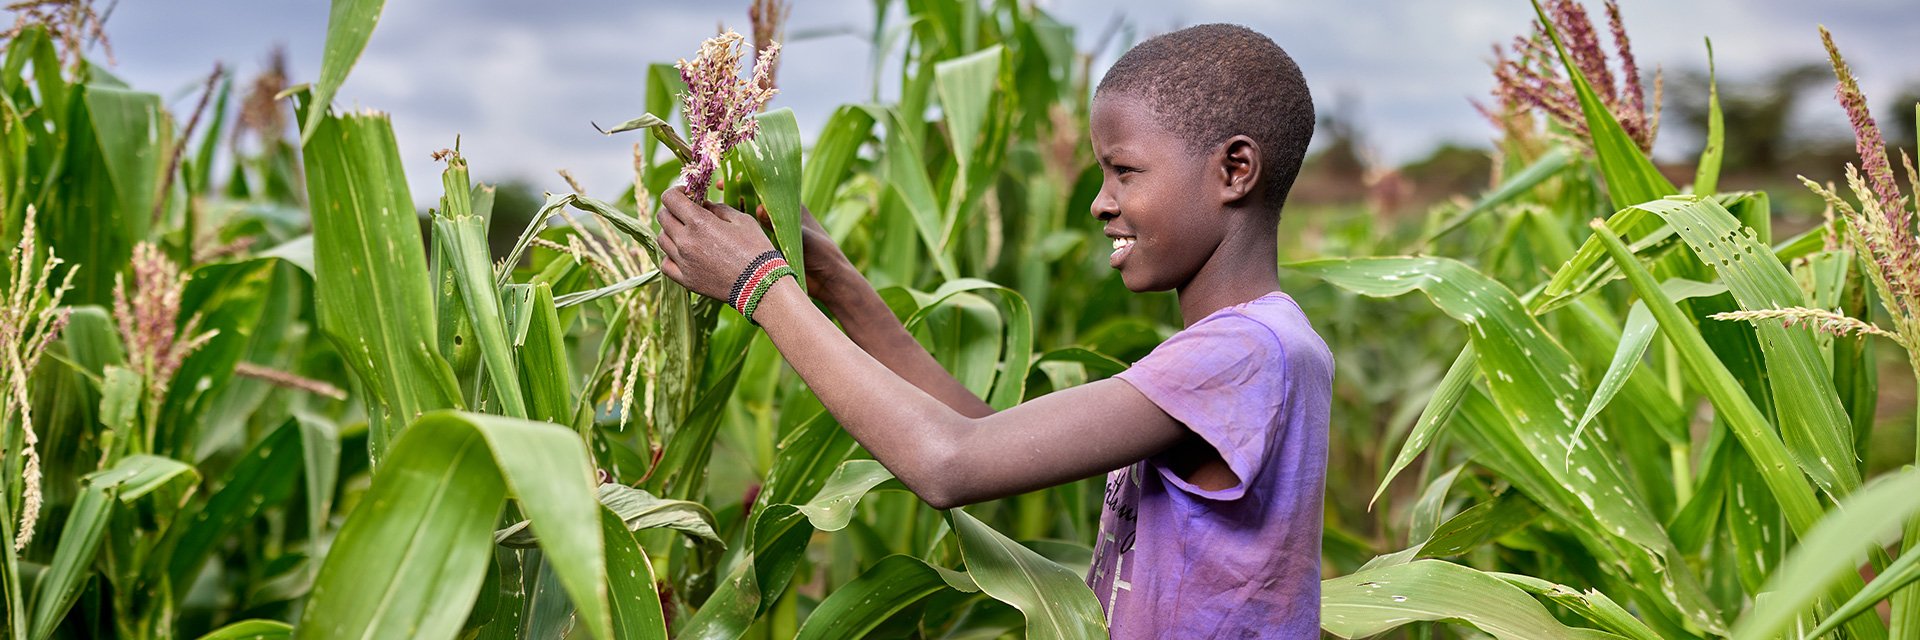 A boy smiles as he picks corn in a cornfield.